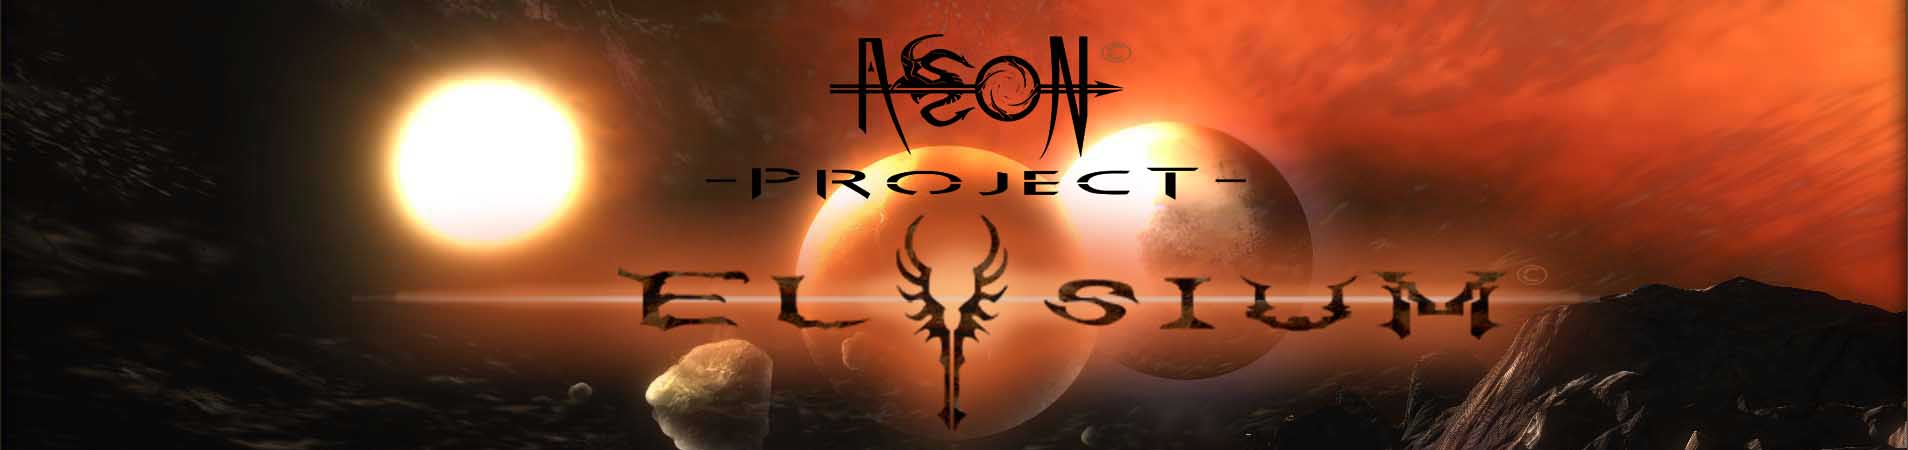 Project: Elysium